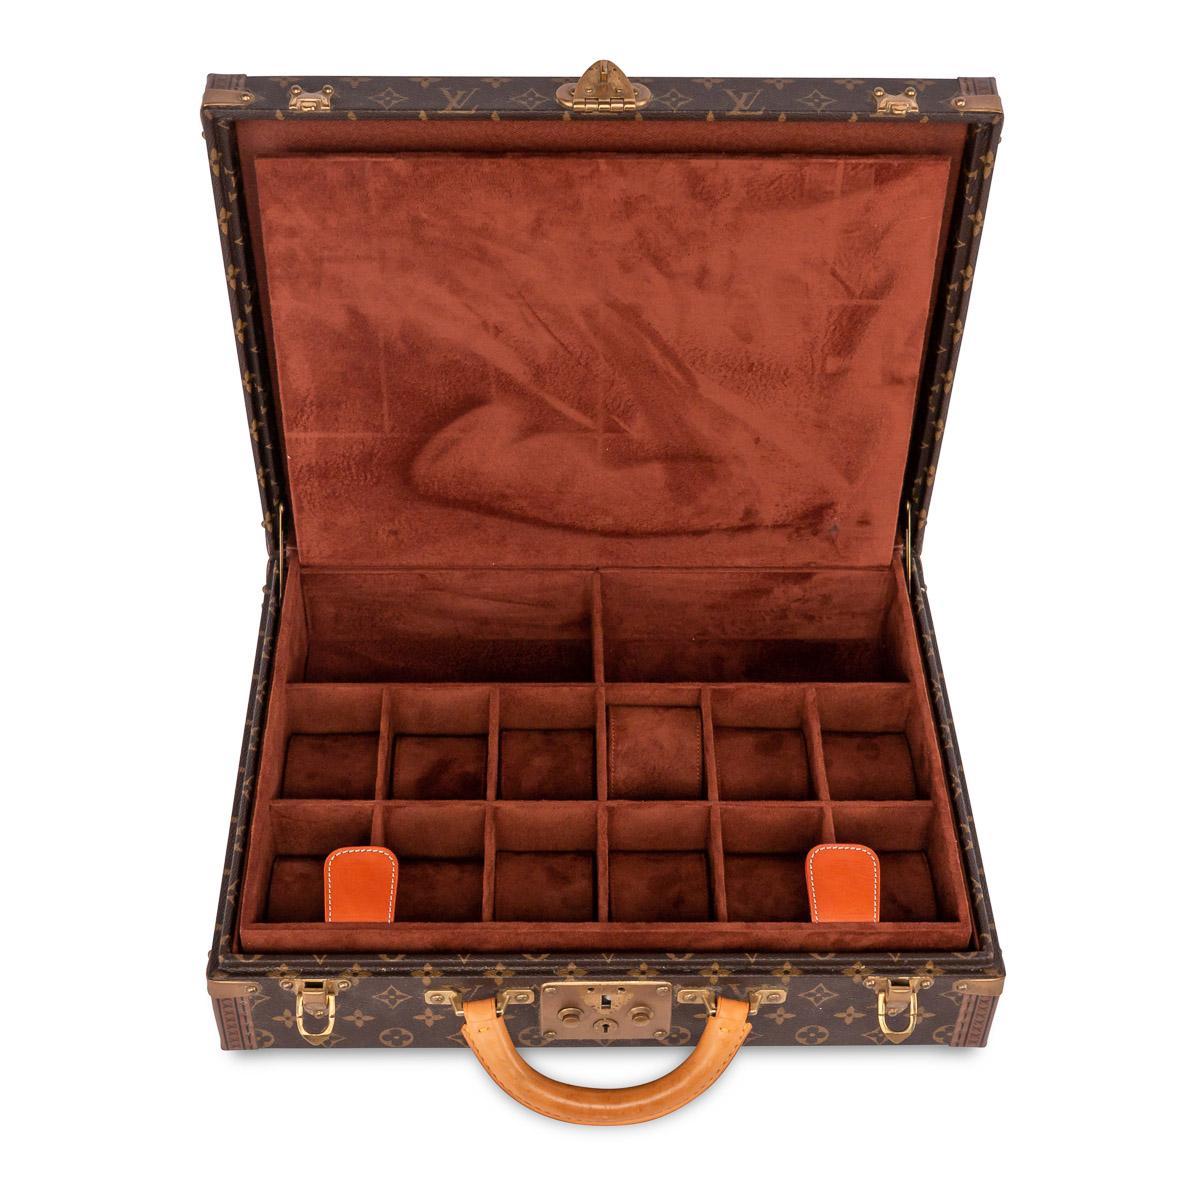 Genuine Louis Vuitton briefcase, edging with 